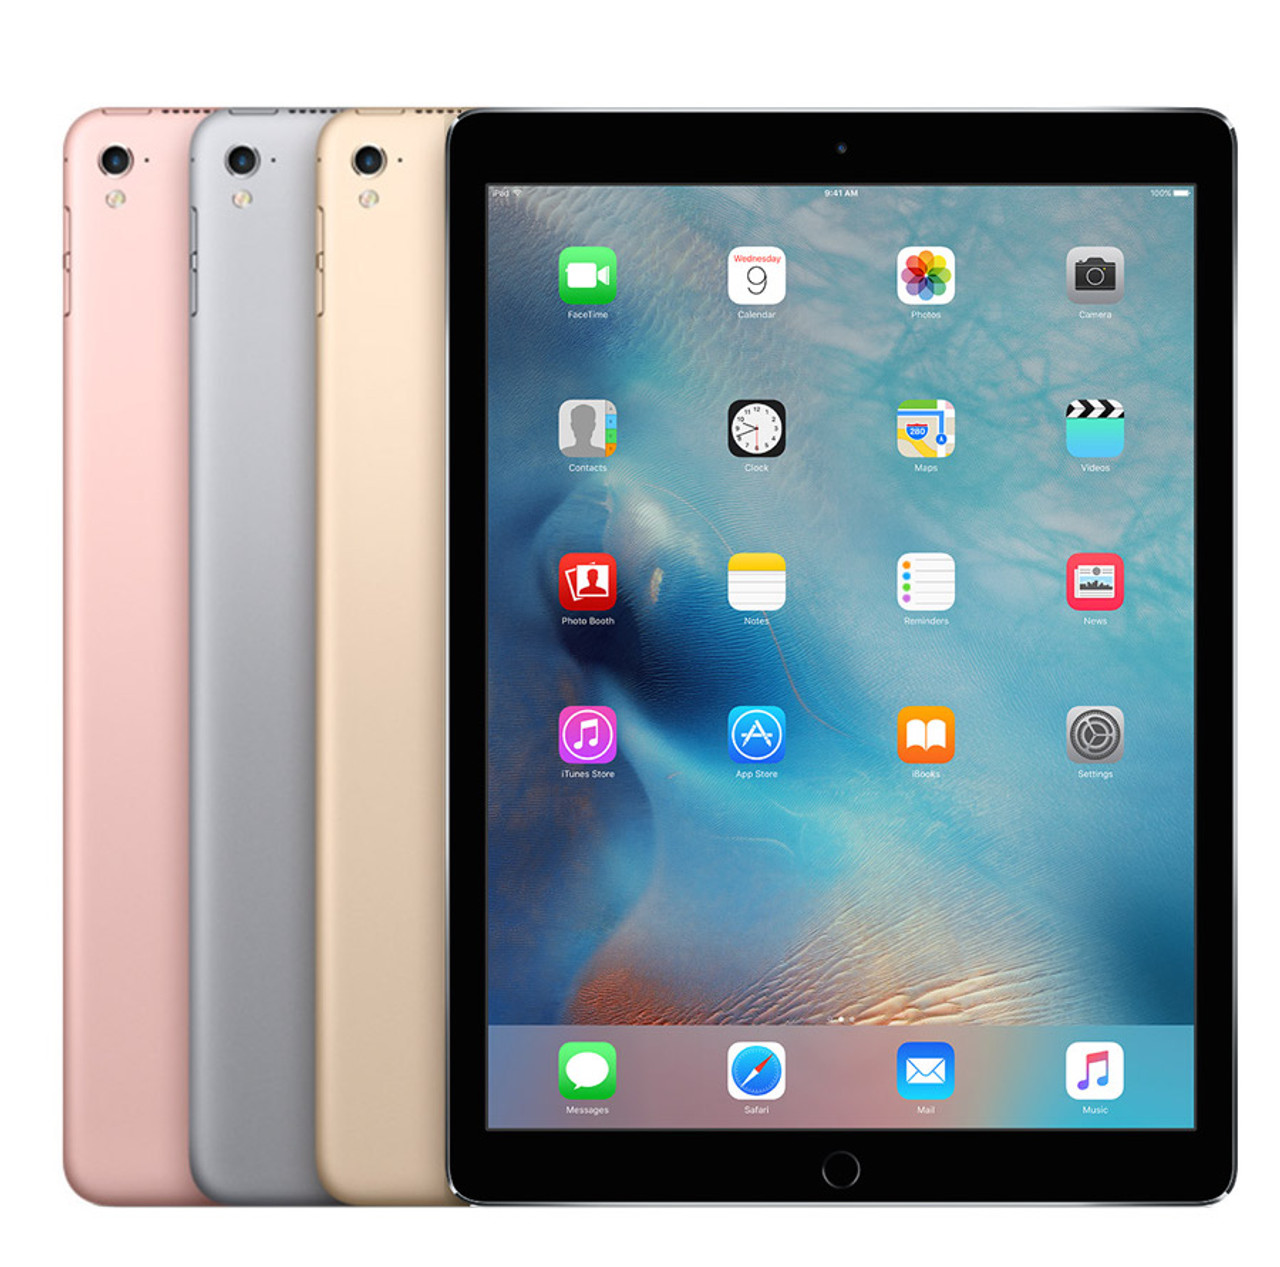 Apple iPad Pro 9.7-inch (32GB) Wi-Fi